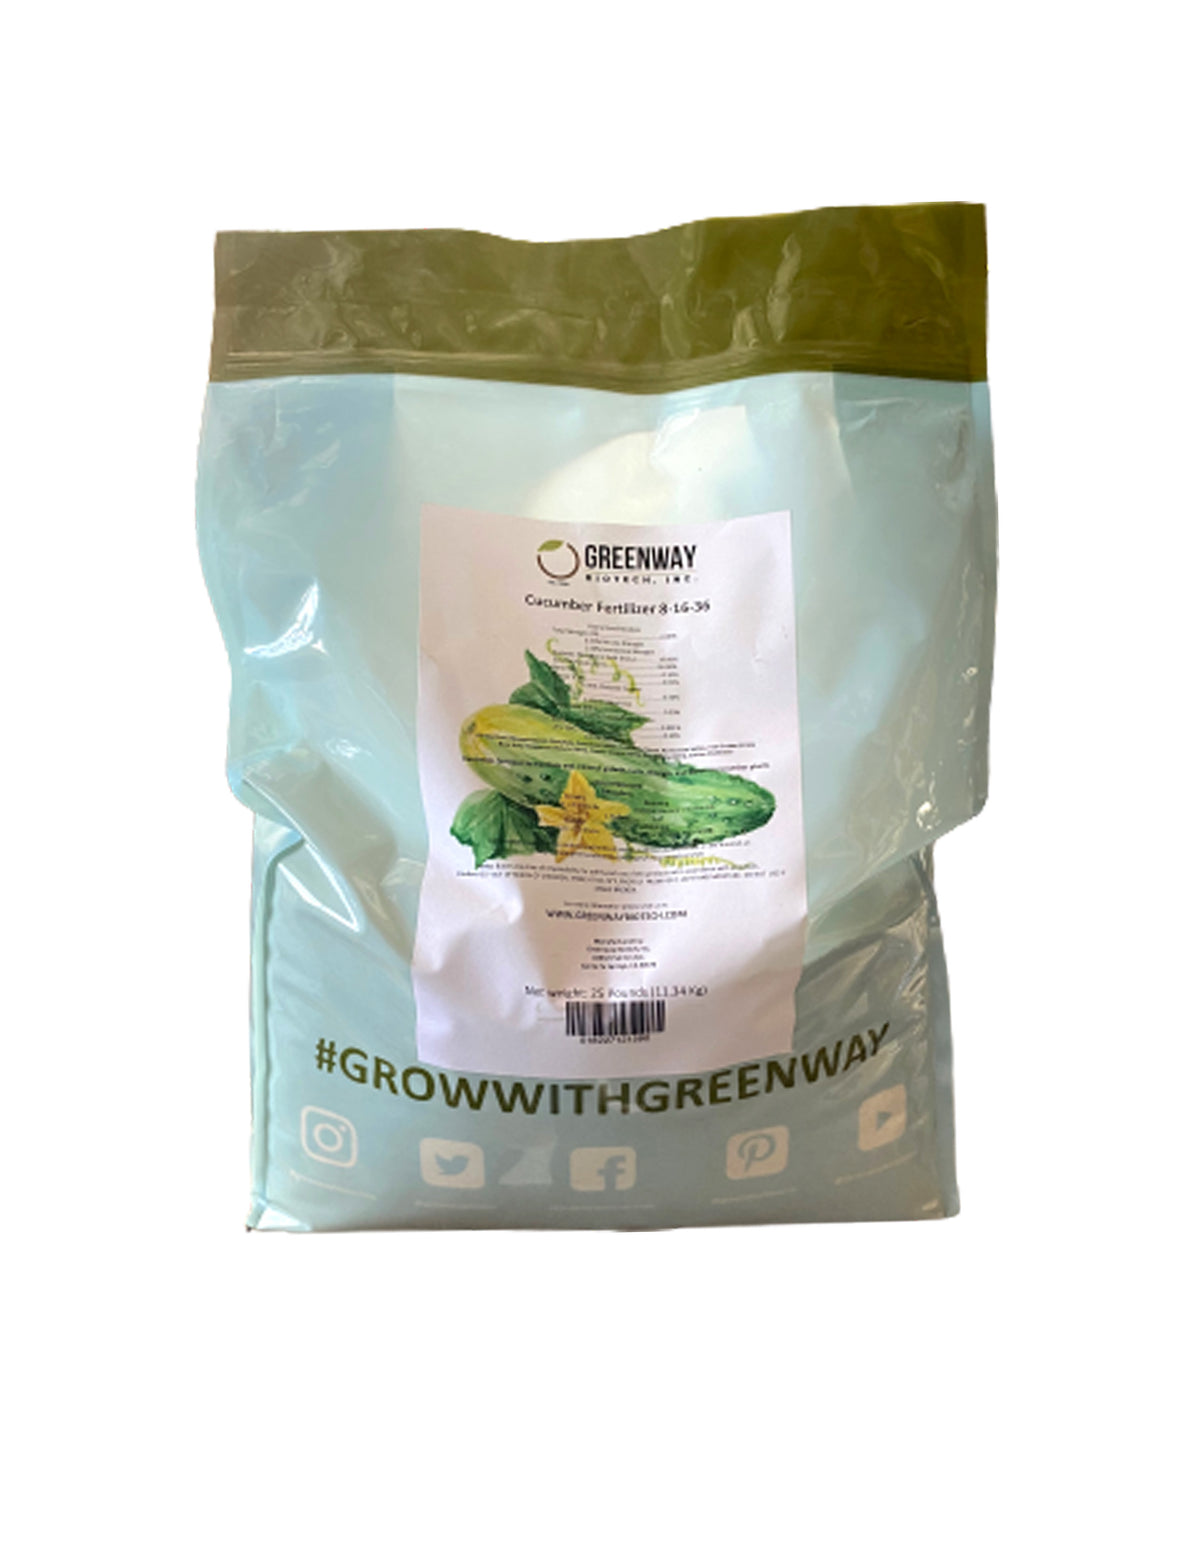 Cucumber Fertilizer 8-16-36 Plus Micro Nutrients